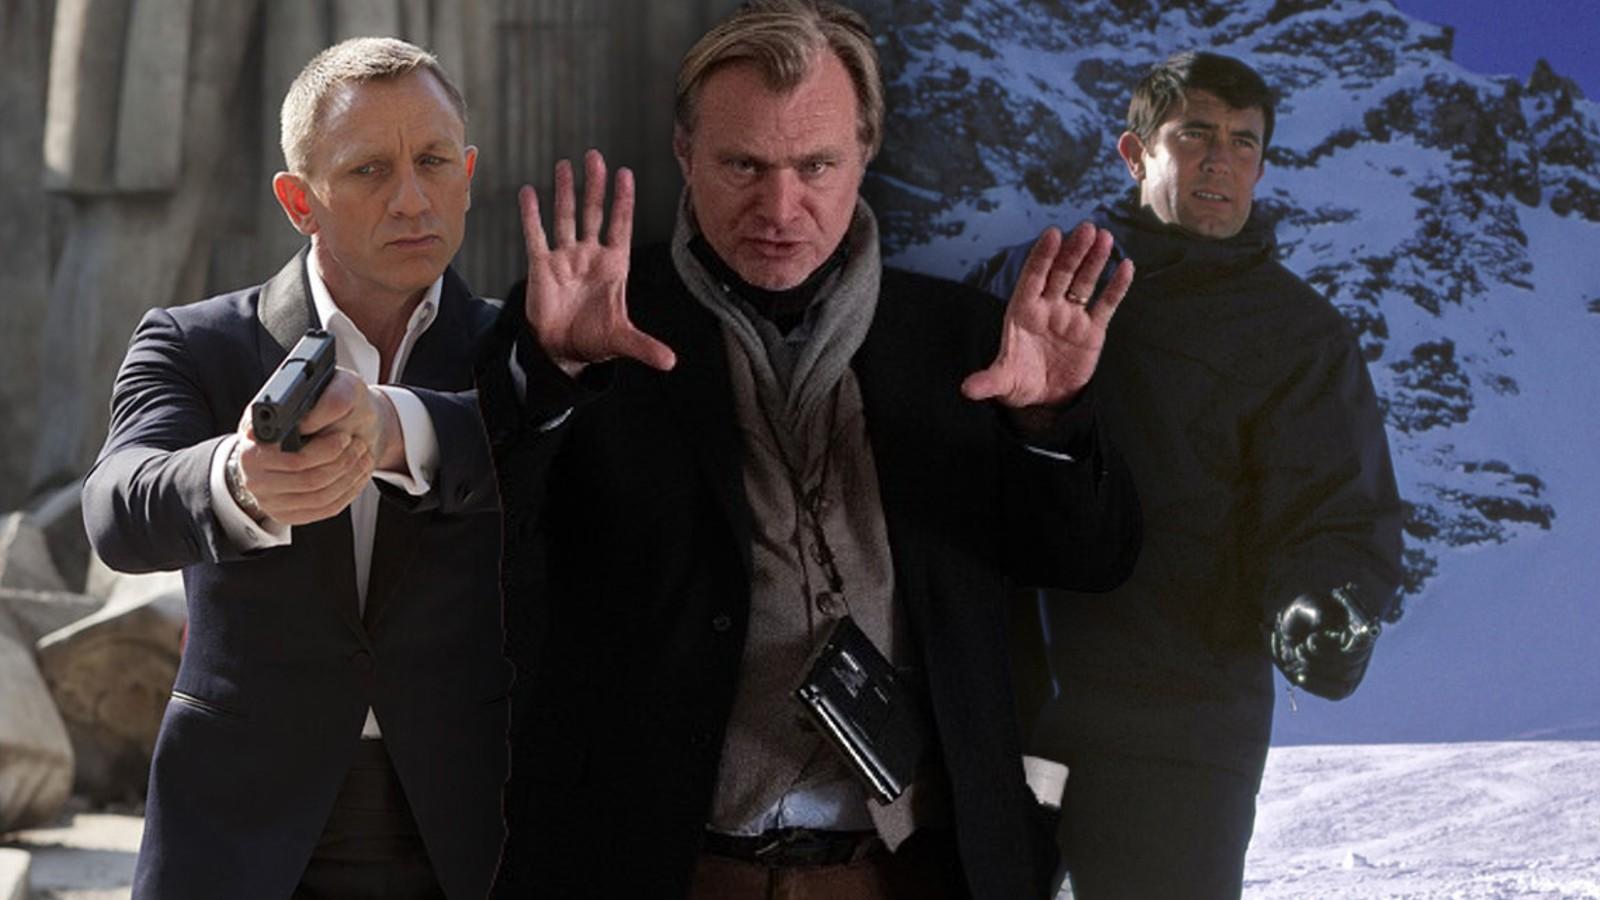 Daniel Craig as James Bond, Christopher Nolan filming Oppenheimer, and George Lazenby as Bond